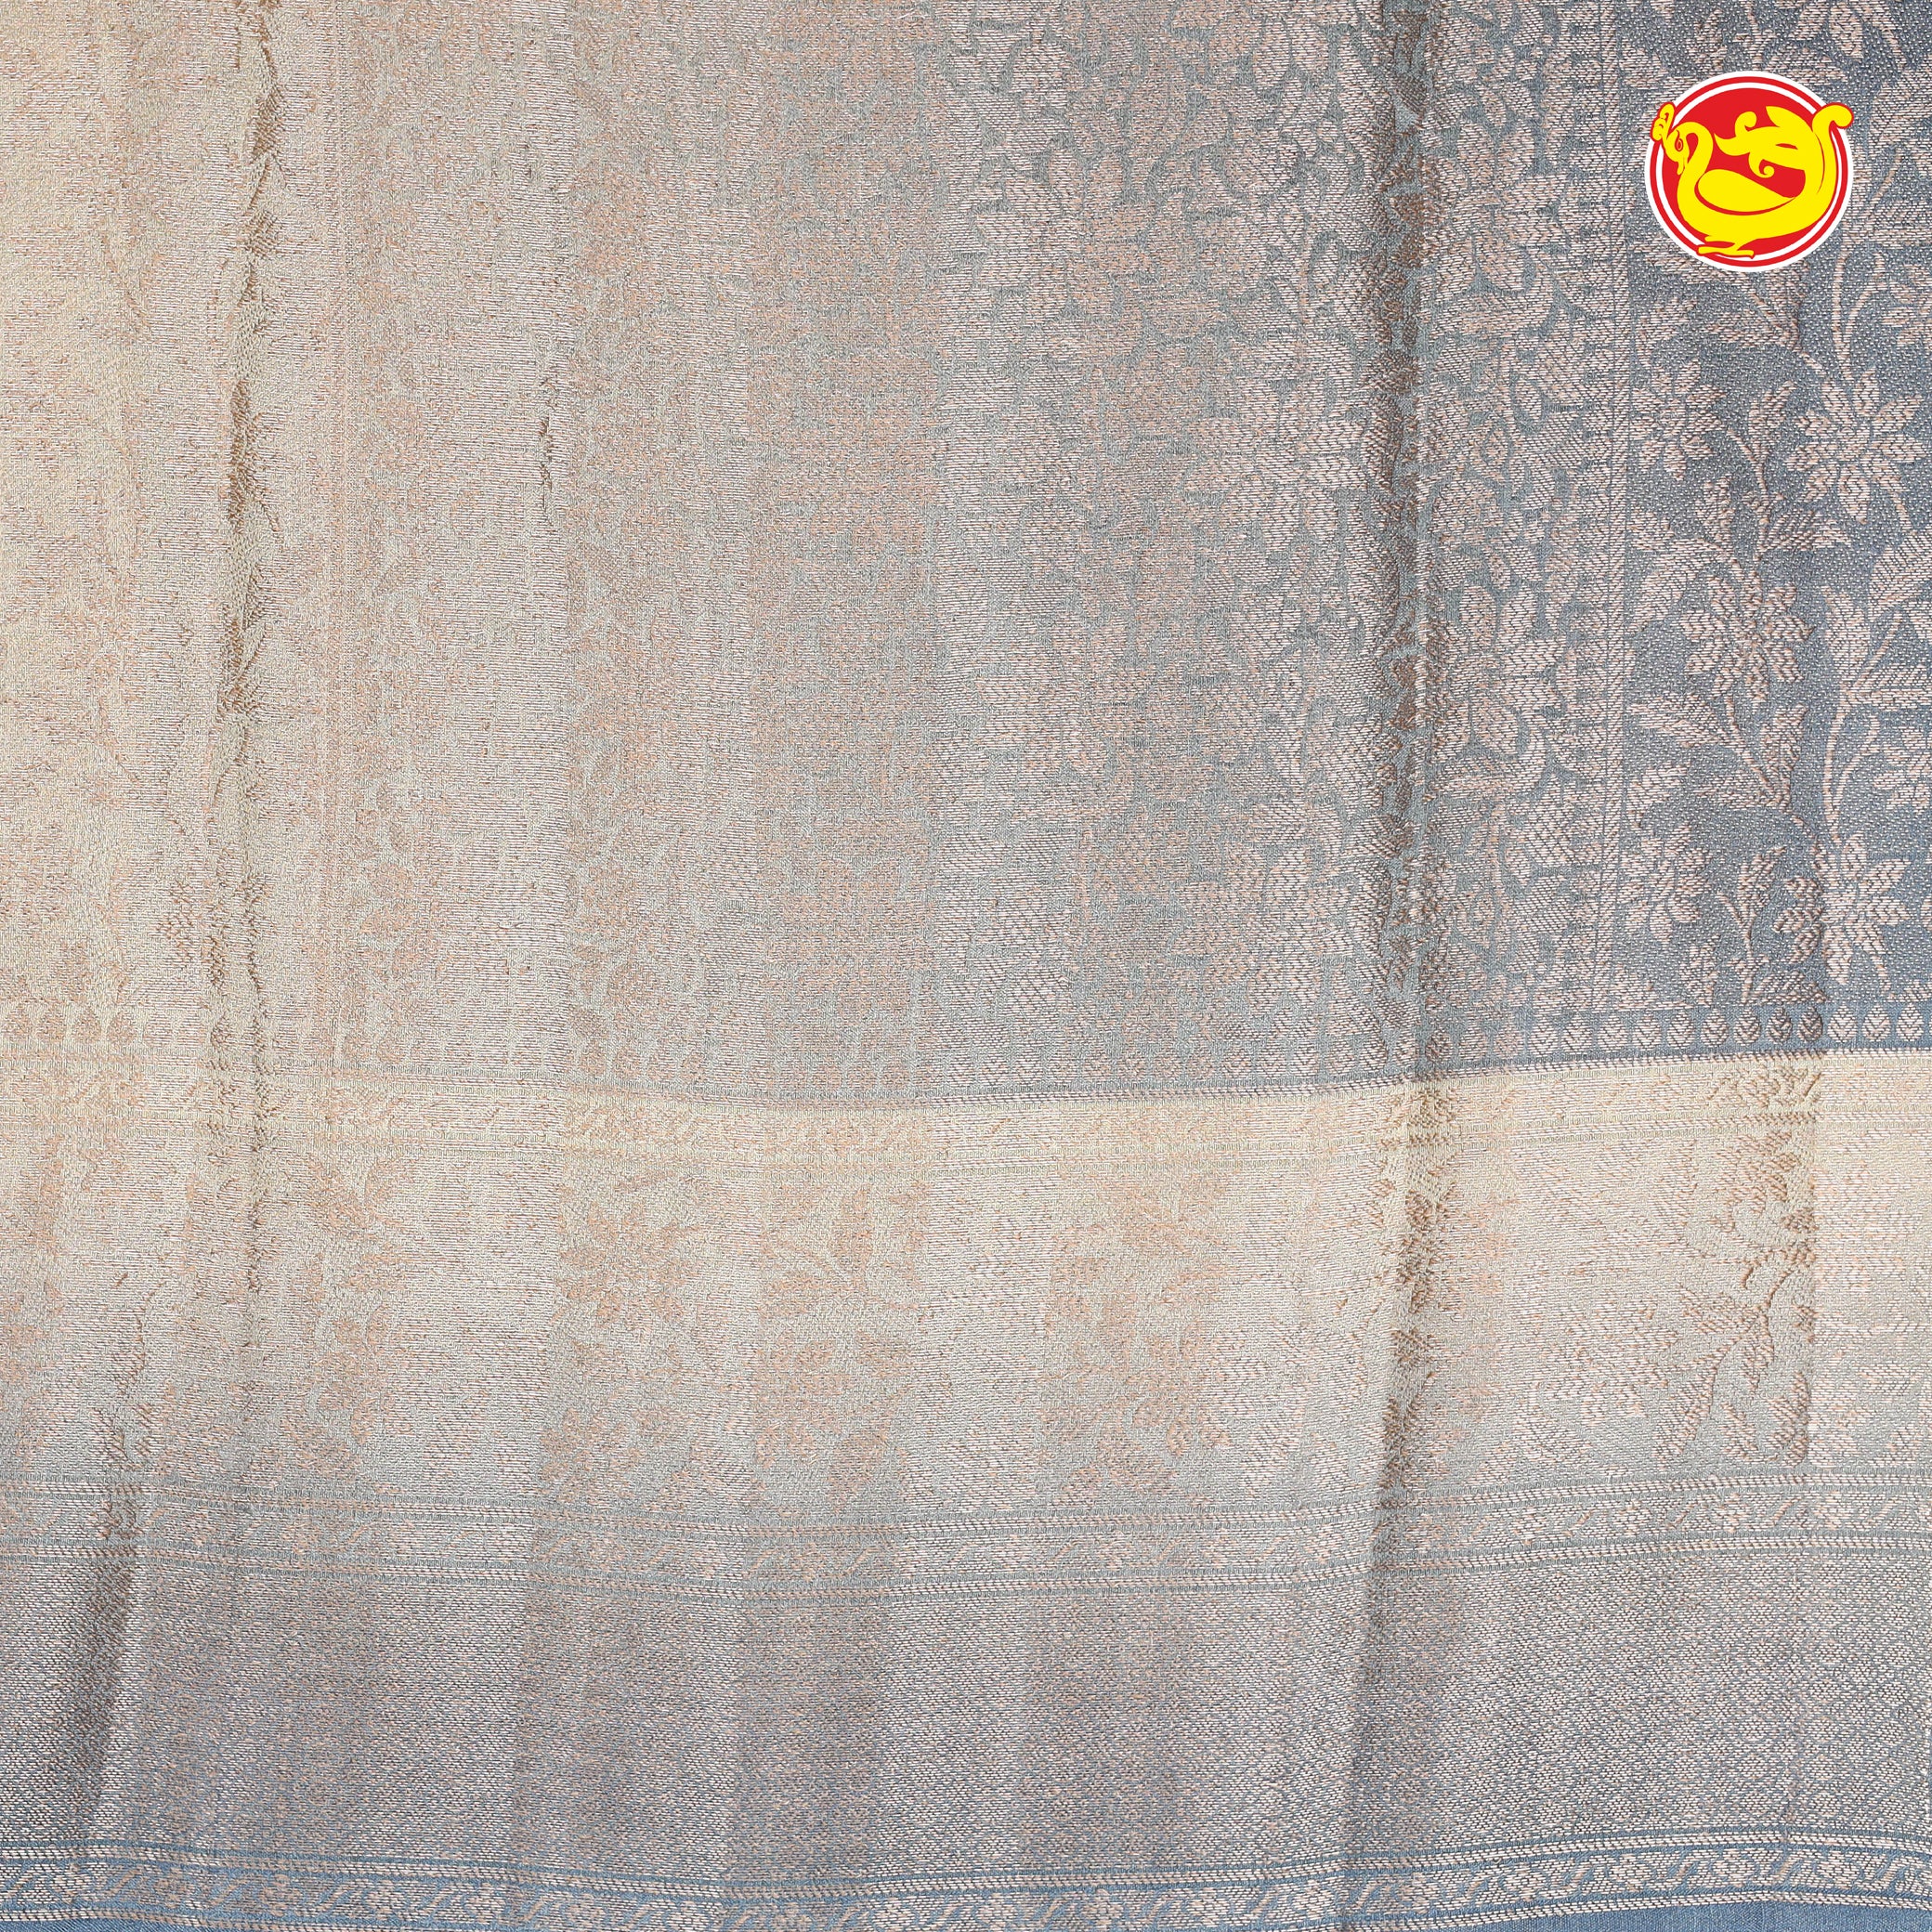 Bluish grey chiniya silk saree with digital floral prints